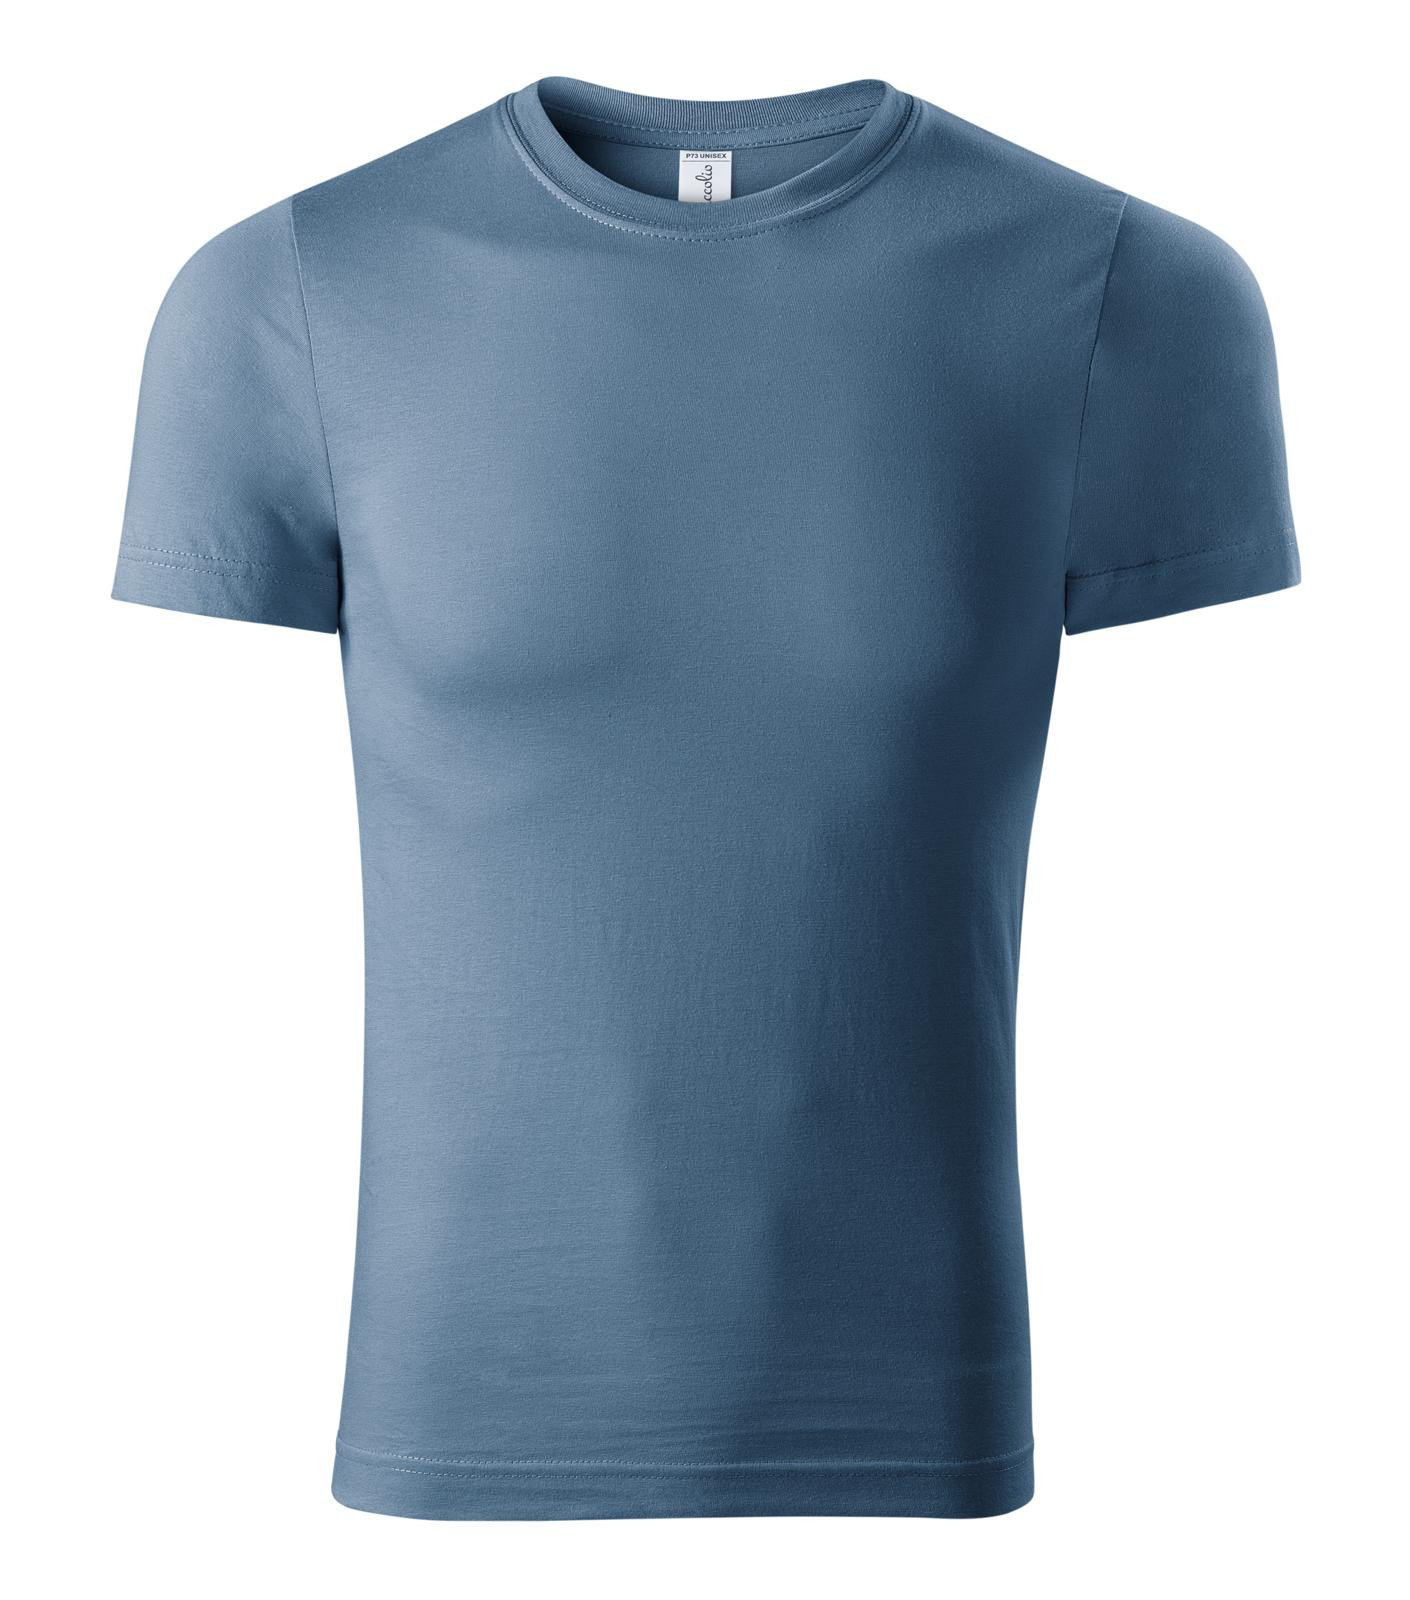 Unisex tričko Piccolio Paint P73 - veľkosť: L, farba: denim